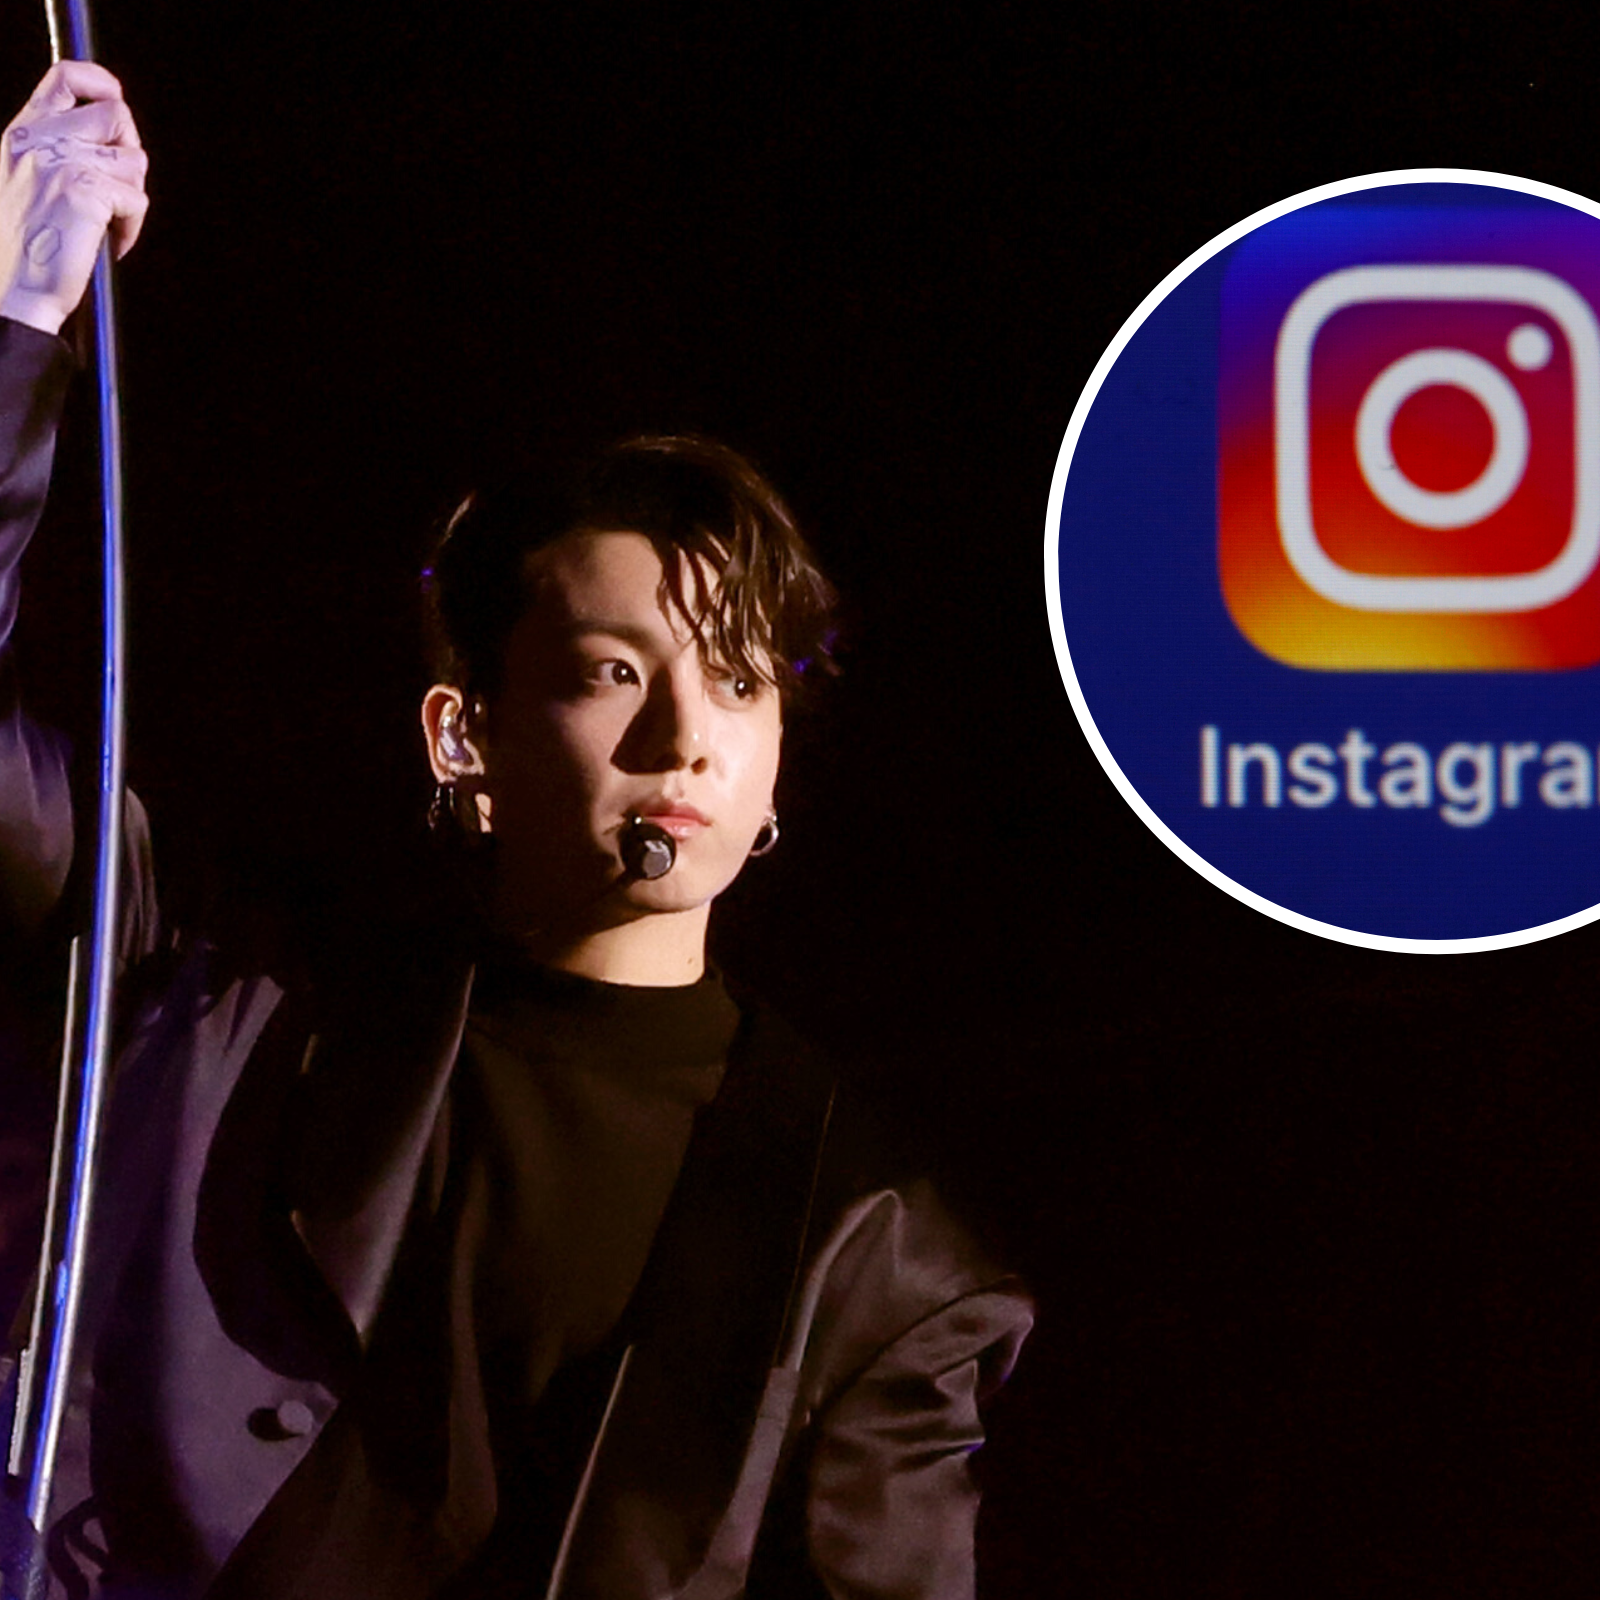 BTS' Jungkook deletes his personal Instagram account